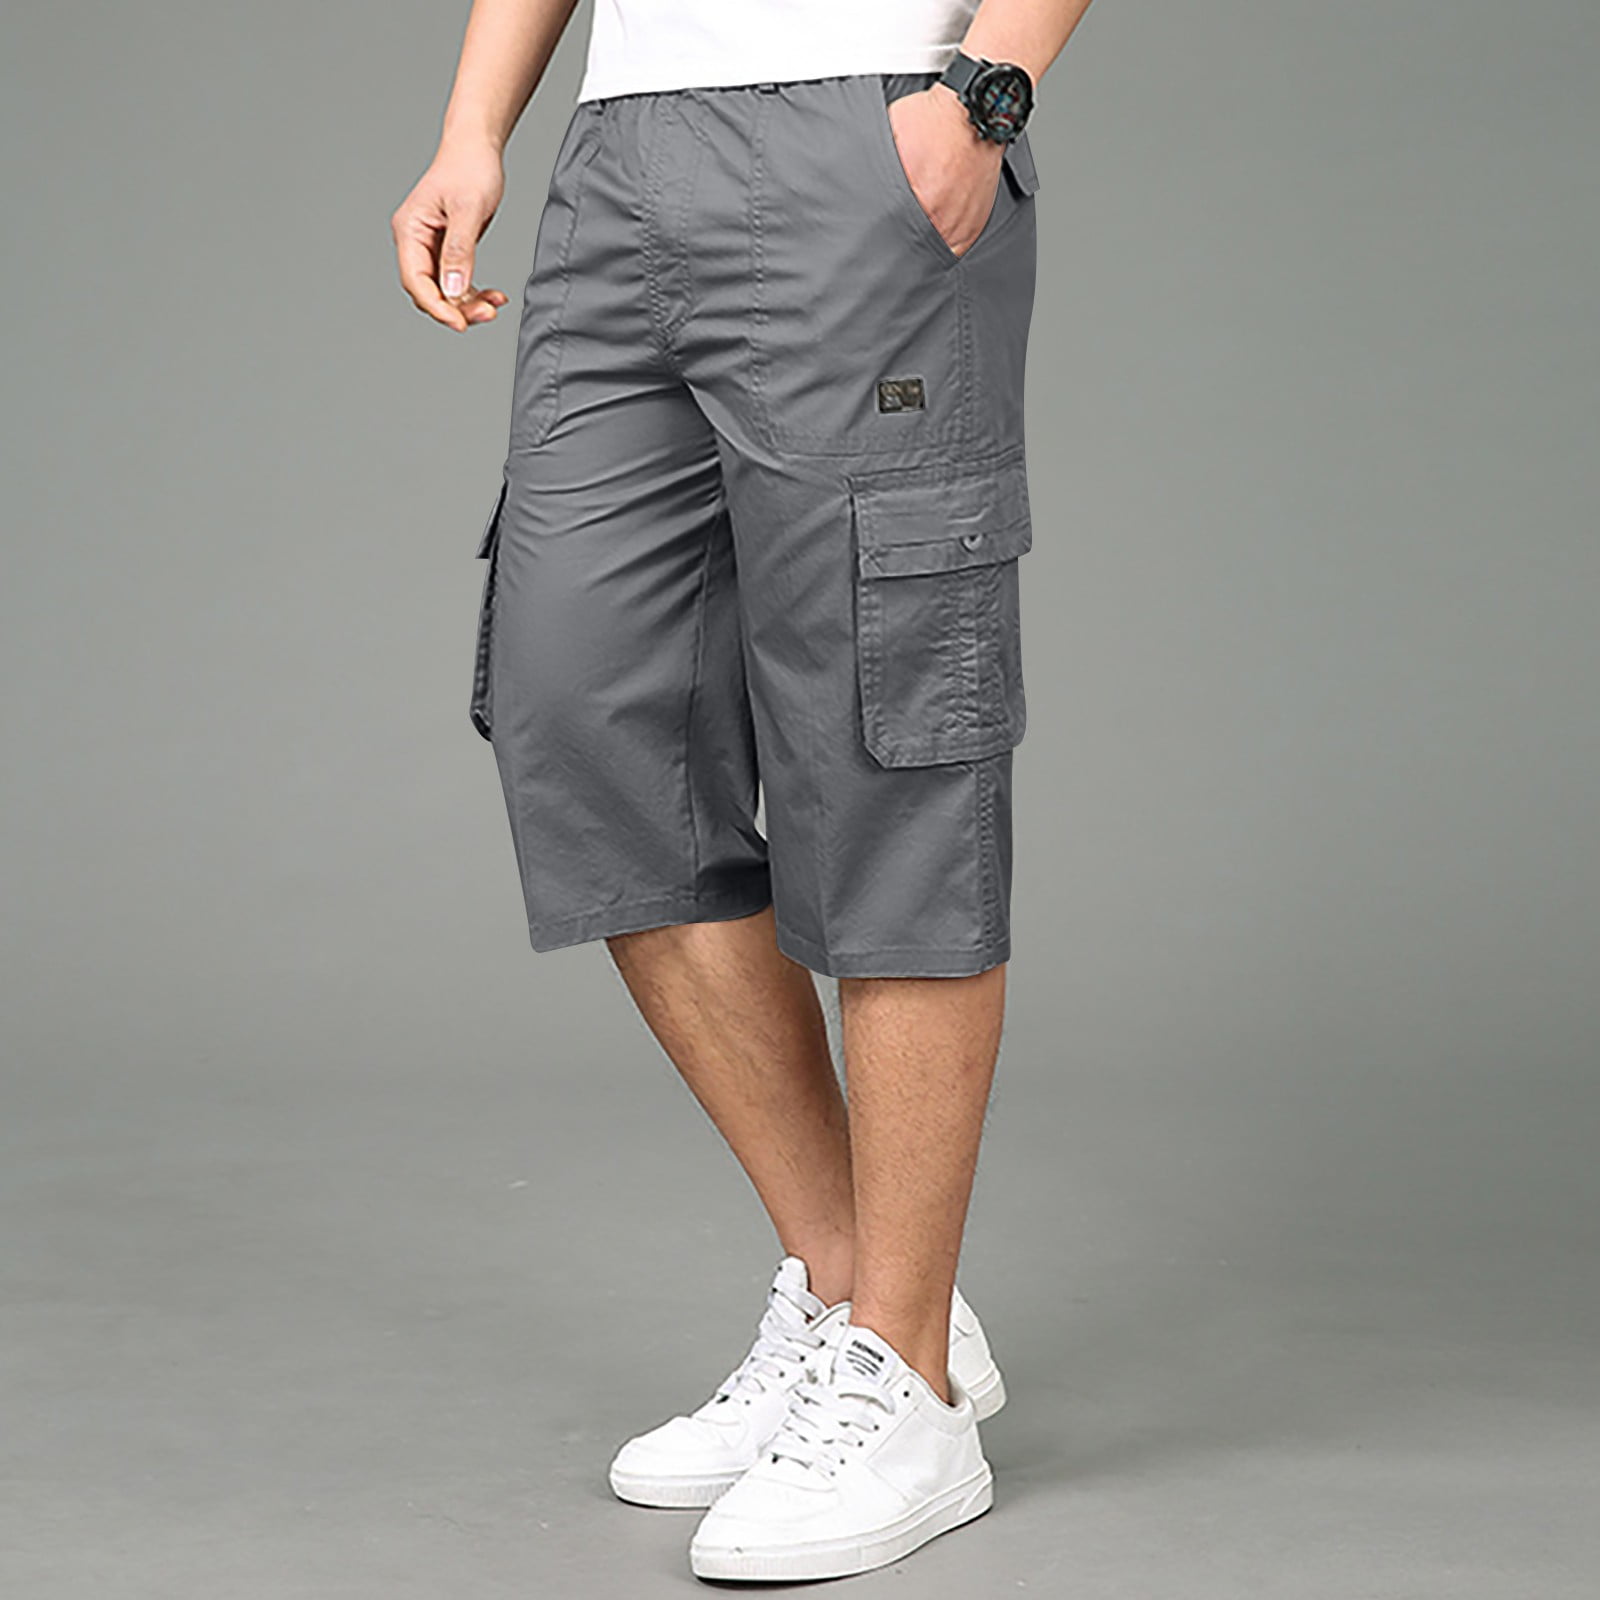 FEDTOSING Men's 3/4 Long Capri Shorts Casual Elastic Waist Cotton Relaxed  Fit Cargo Shorts Black 